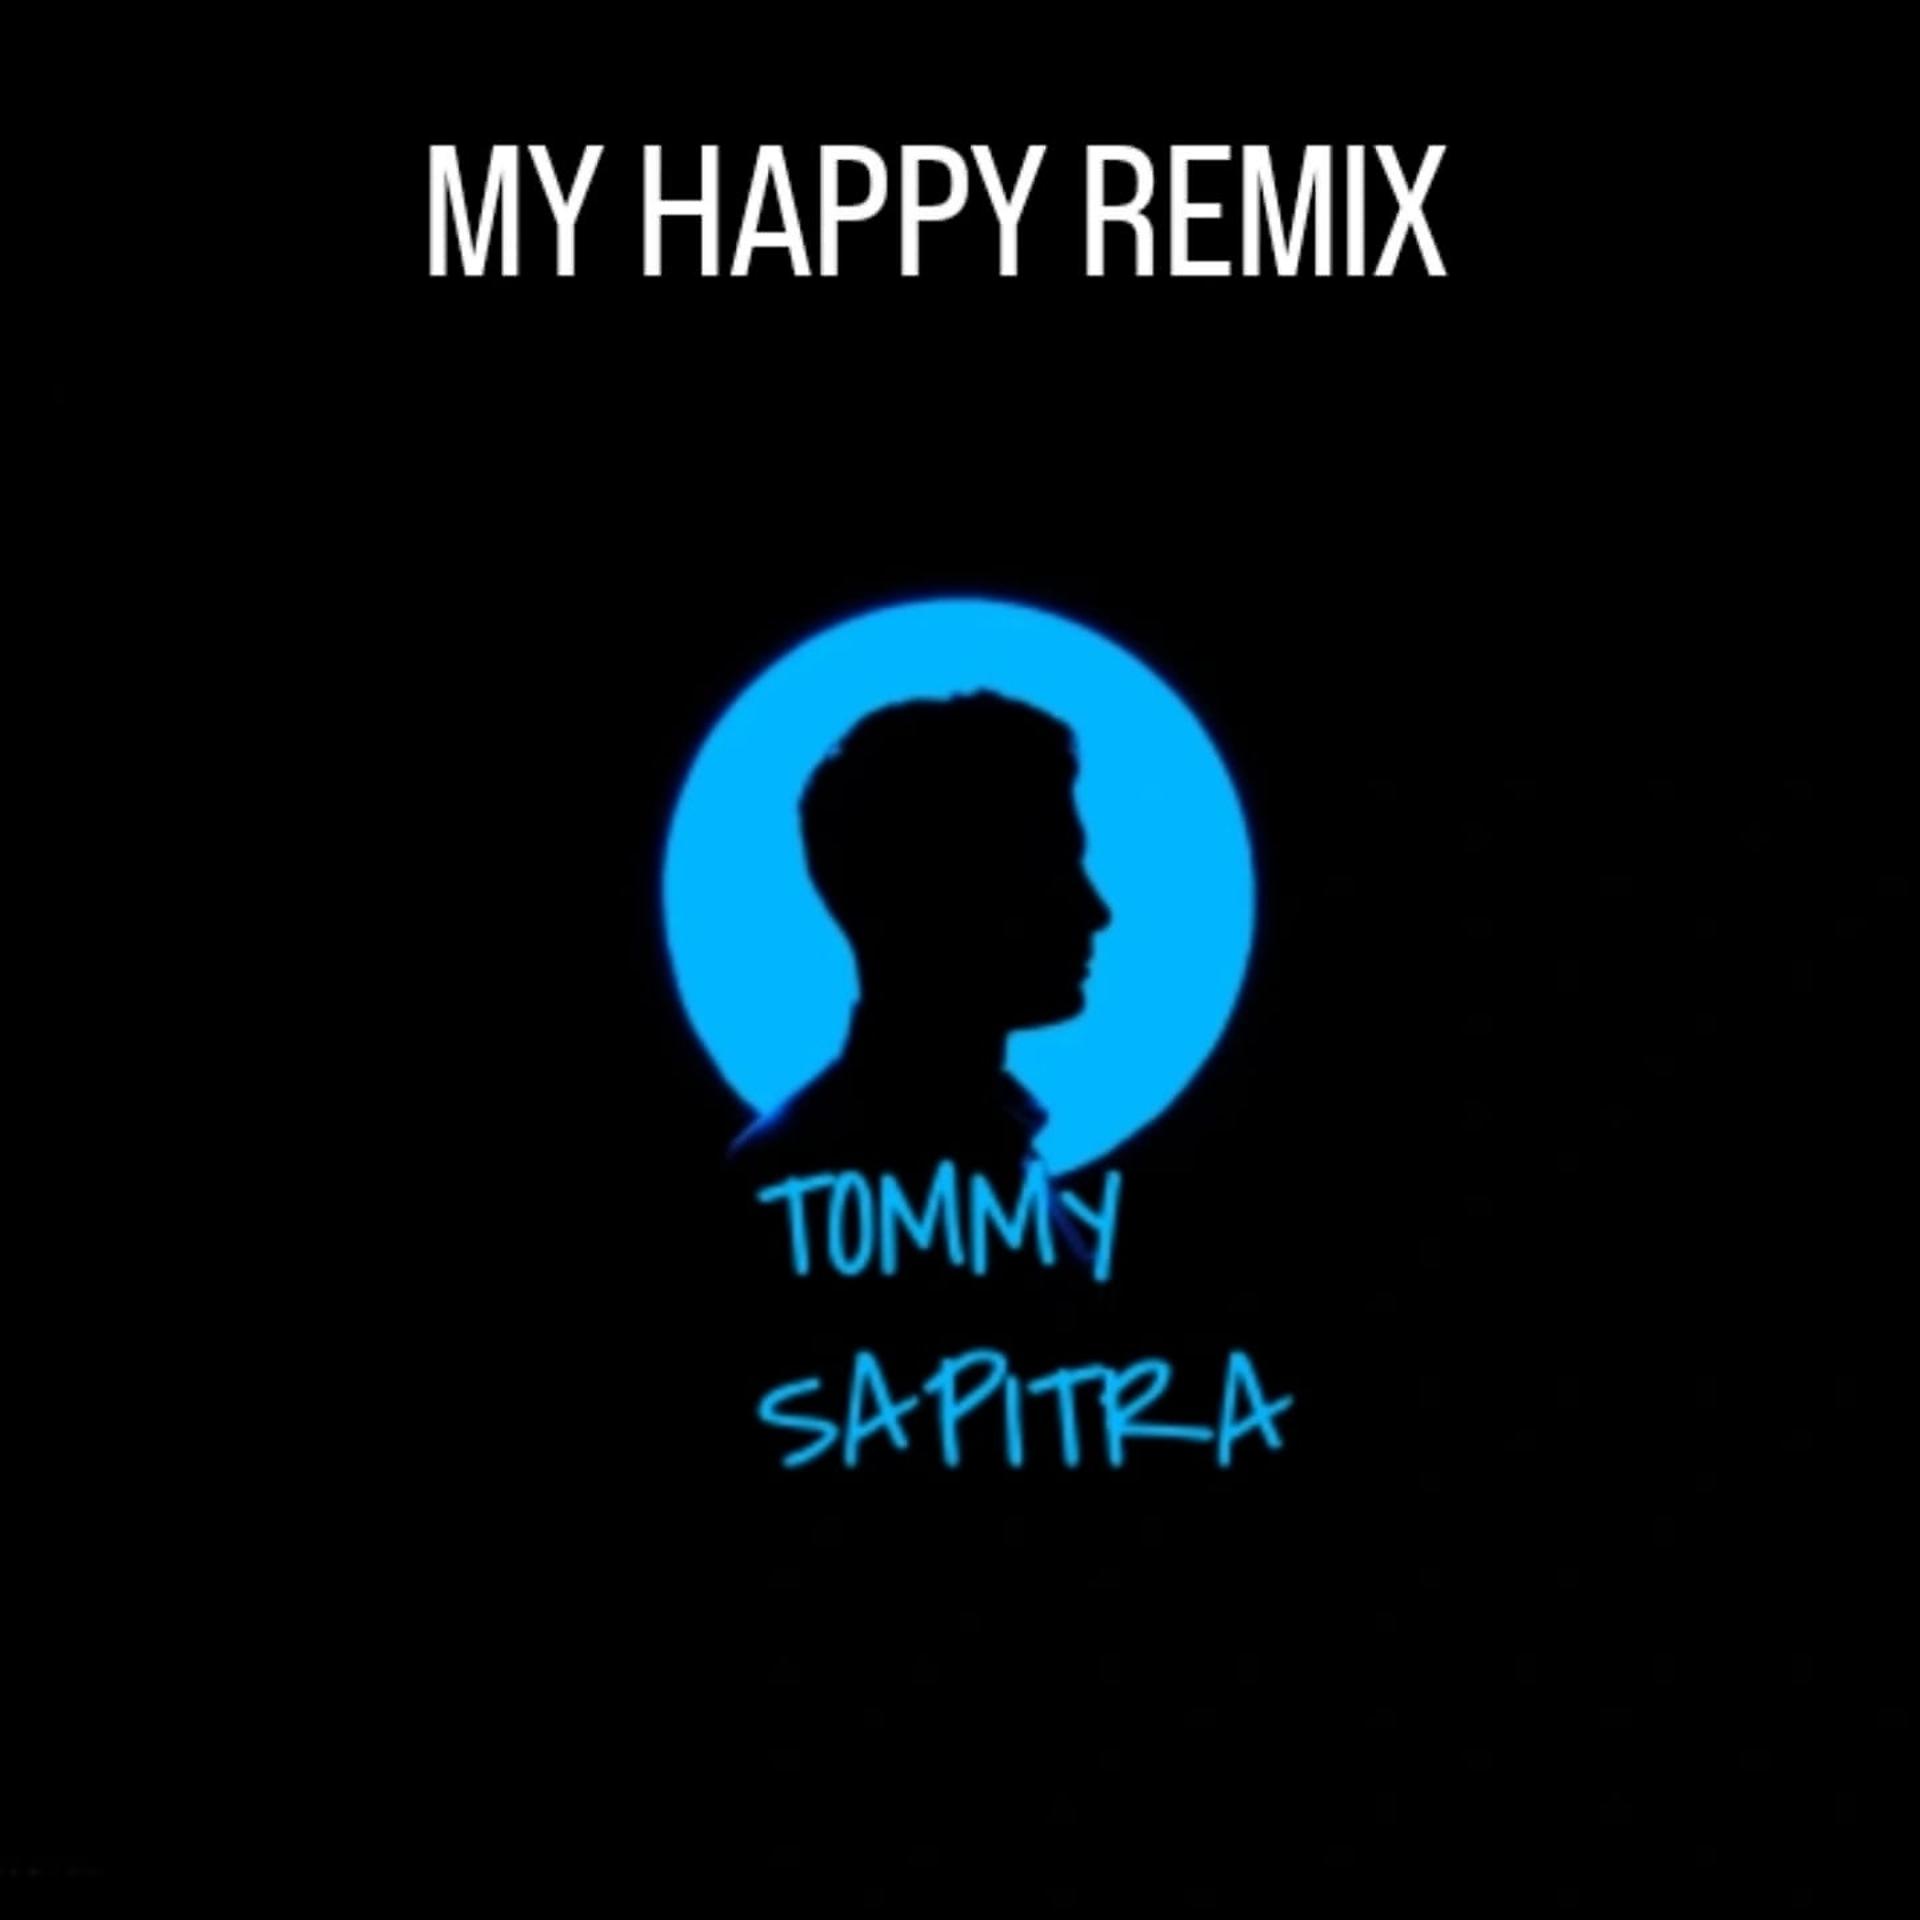 TJ stay Happy Remix. Be happy remix